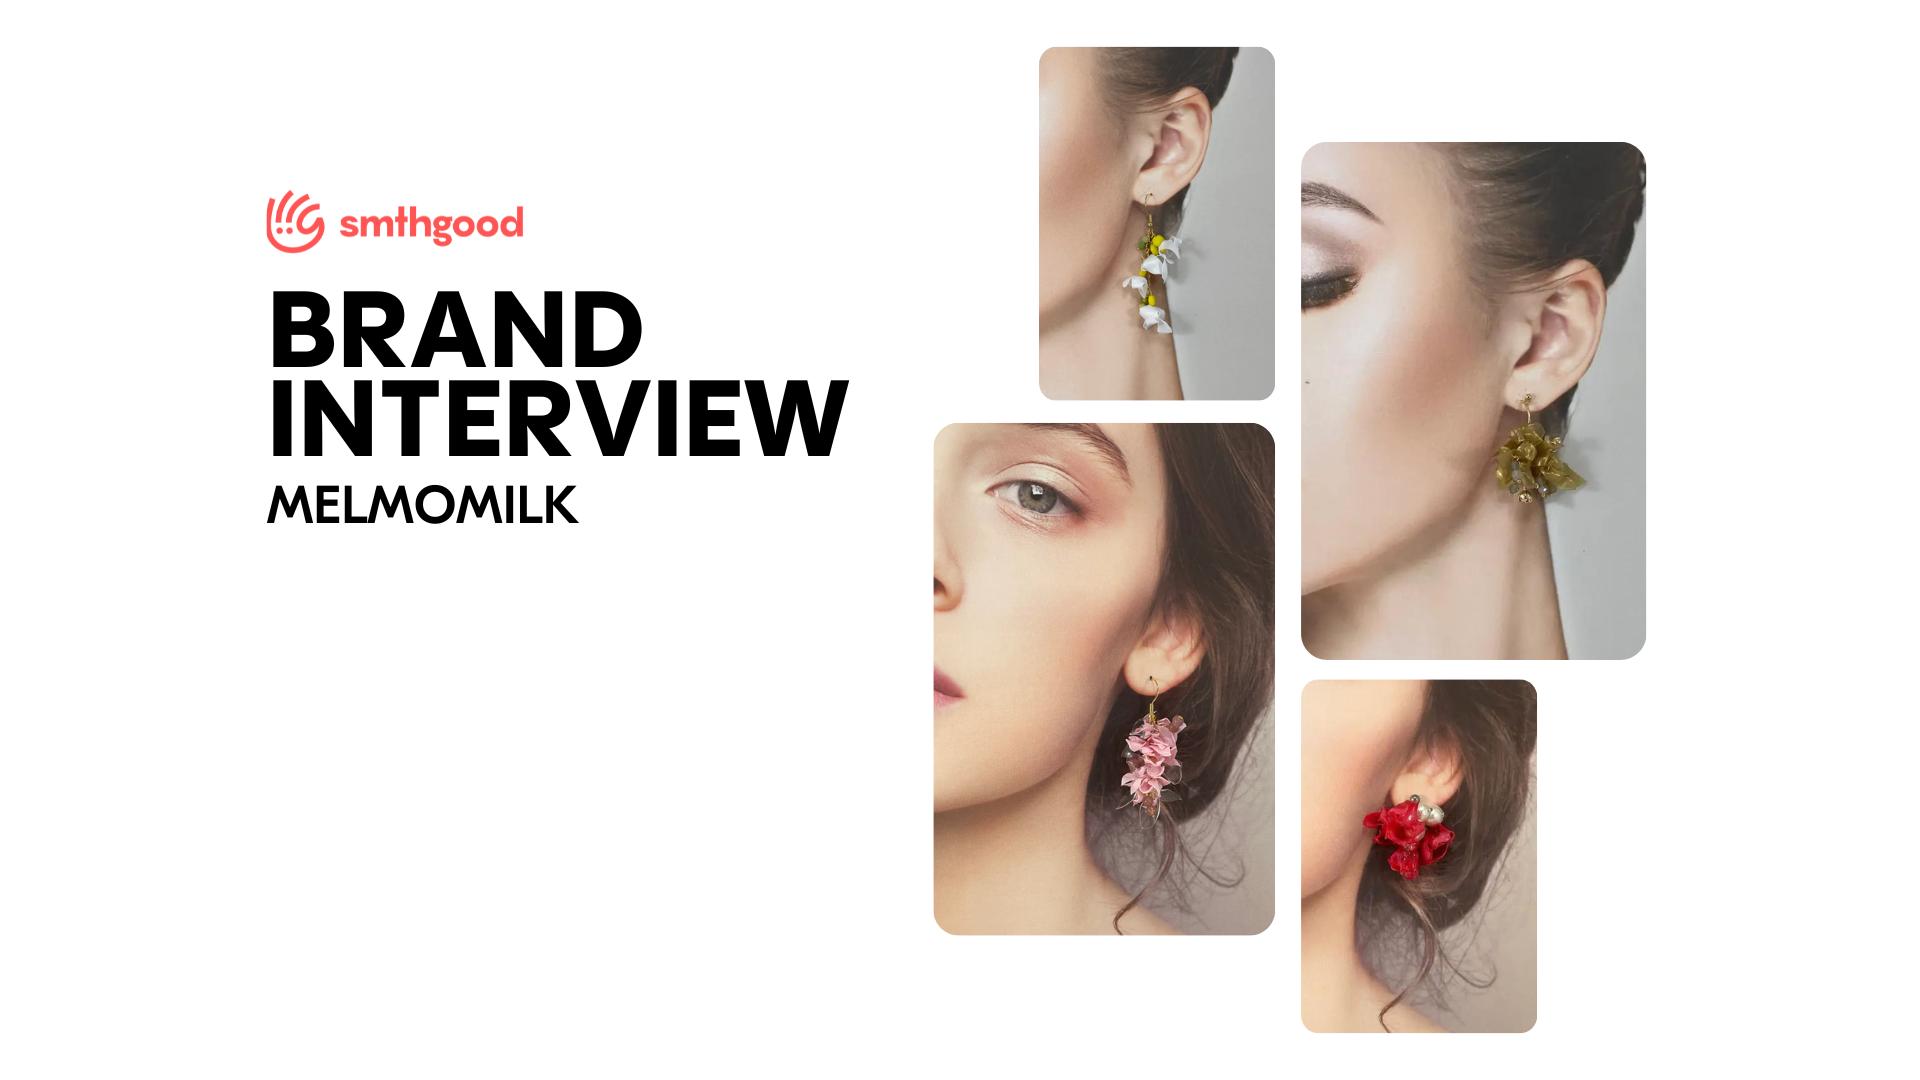 Exclusive Interview With Brand: Melmomilk